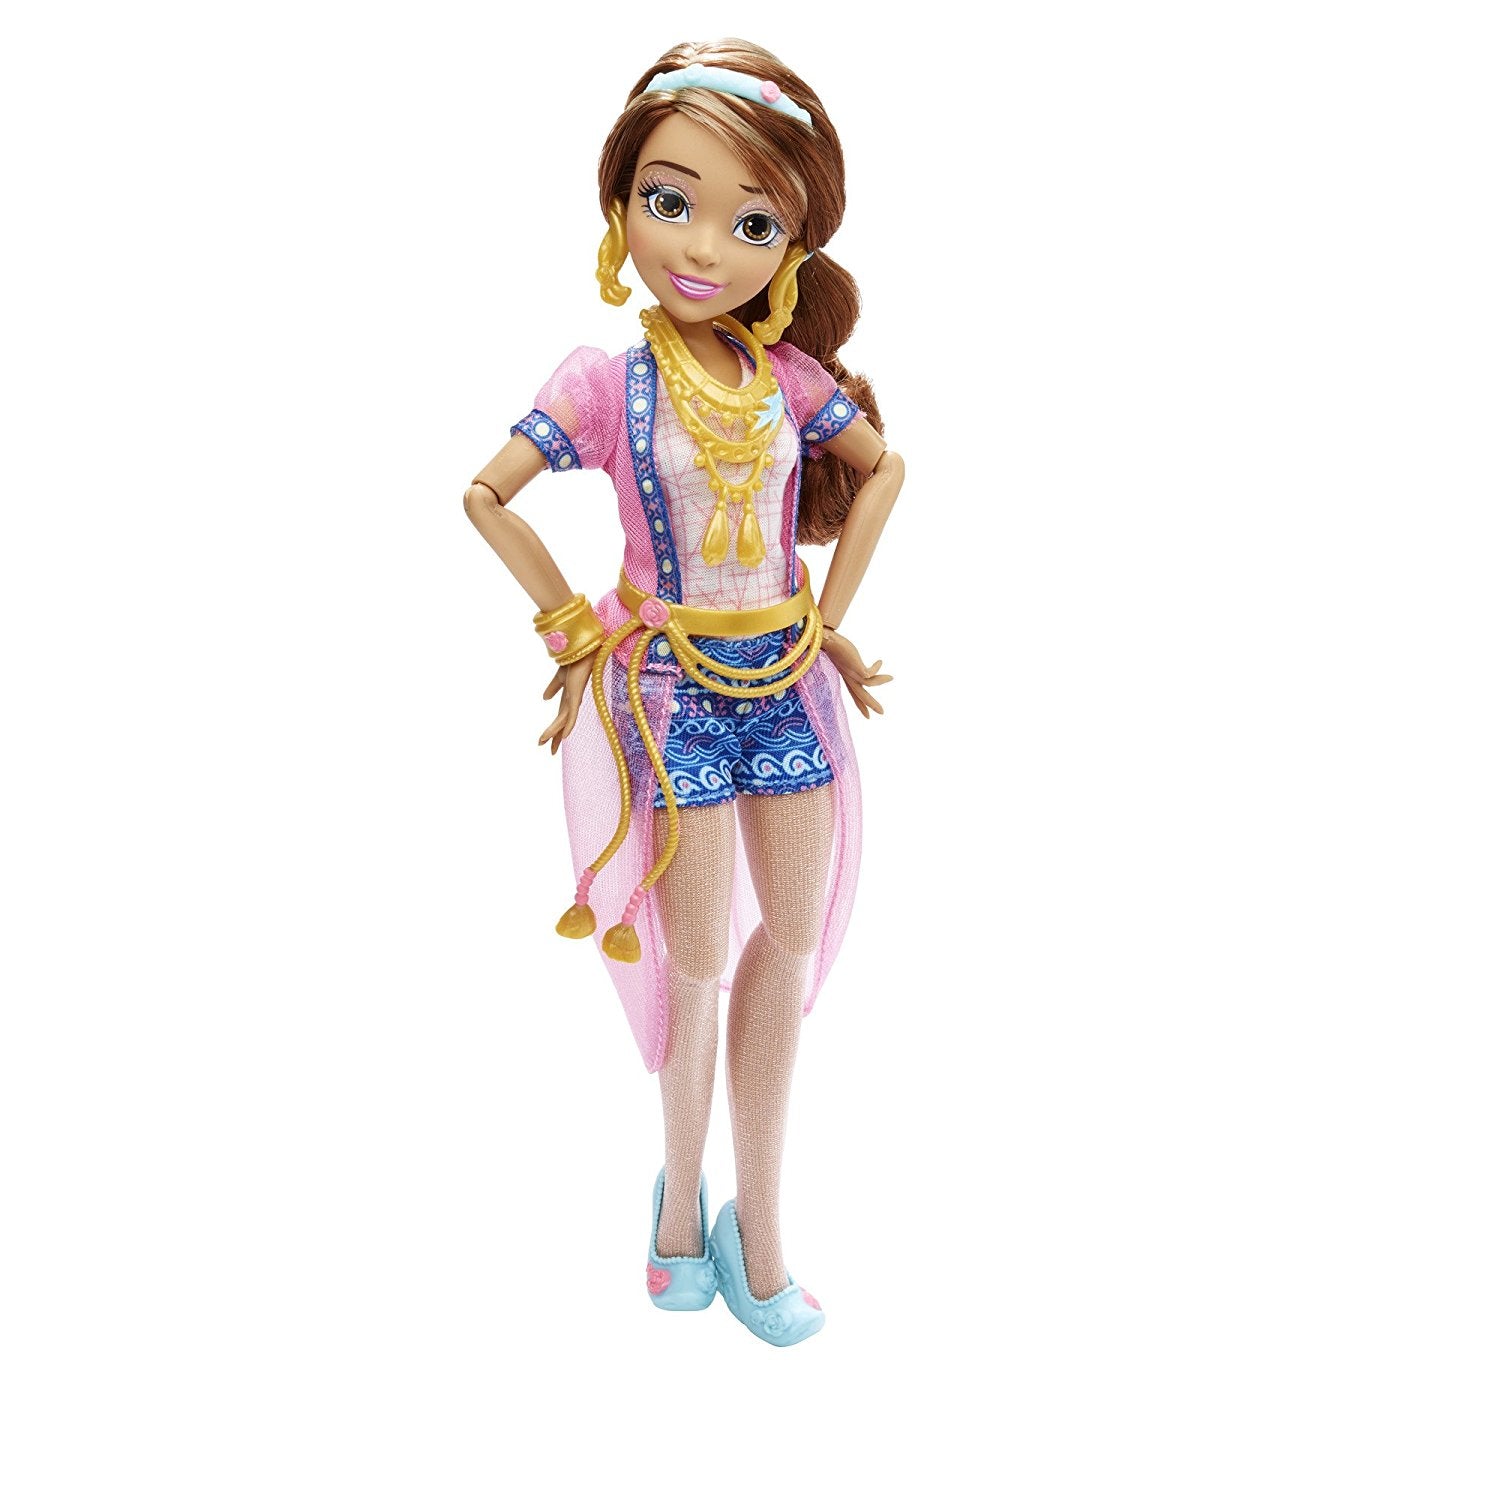 Year 2015 Disney Descendants Genie Chic Series 12 Inch Doll - Auradon Prep  Daughter of Genie JORDAN with Earrings and Bangles